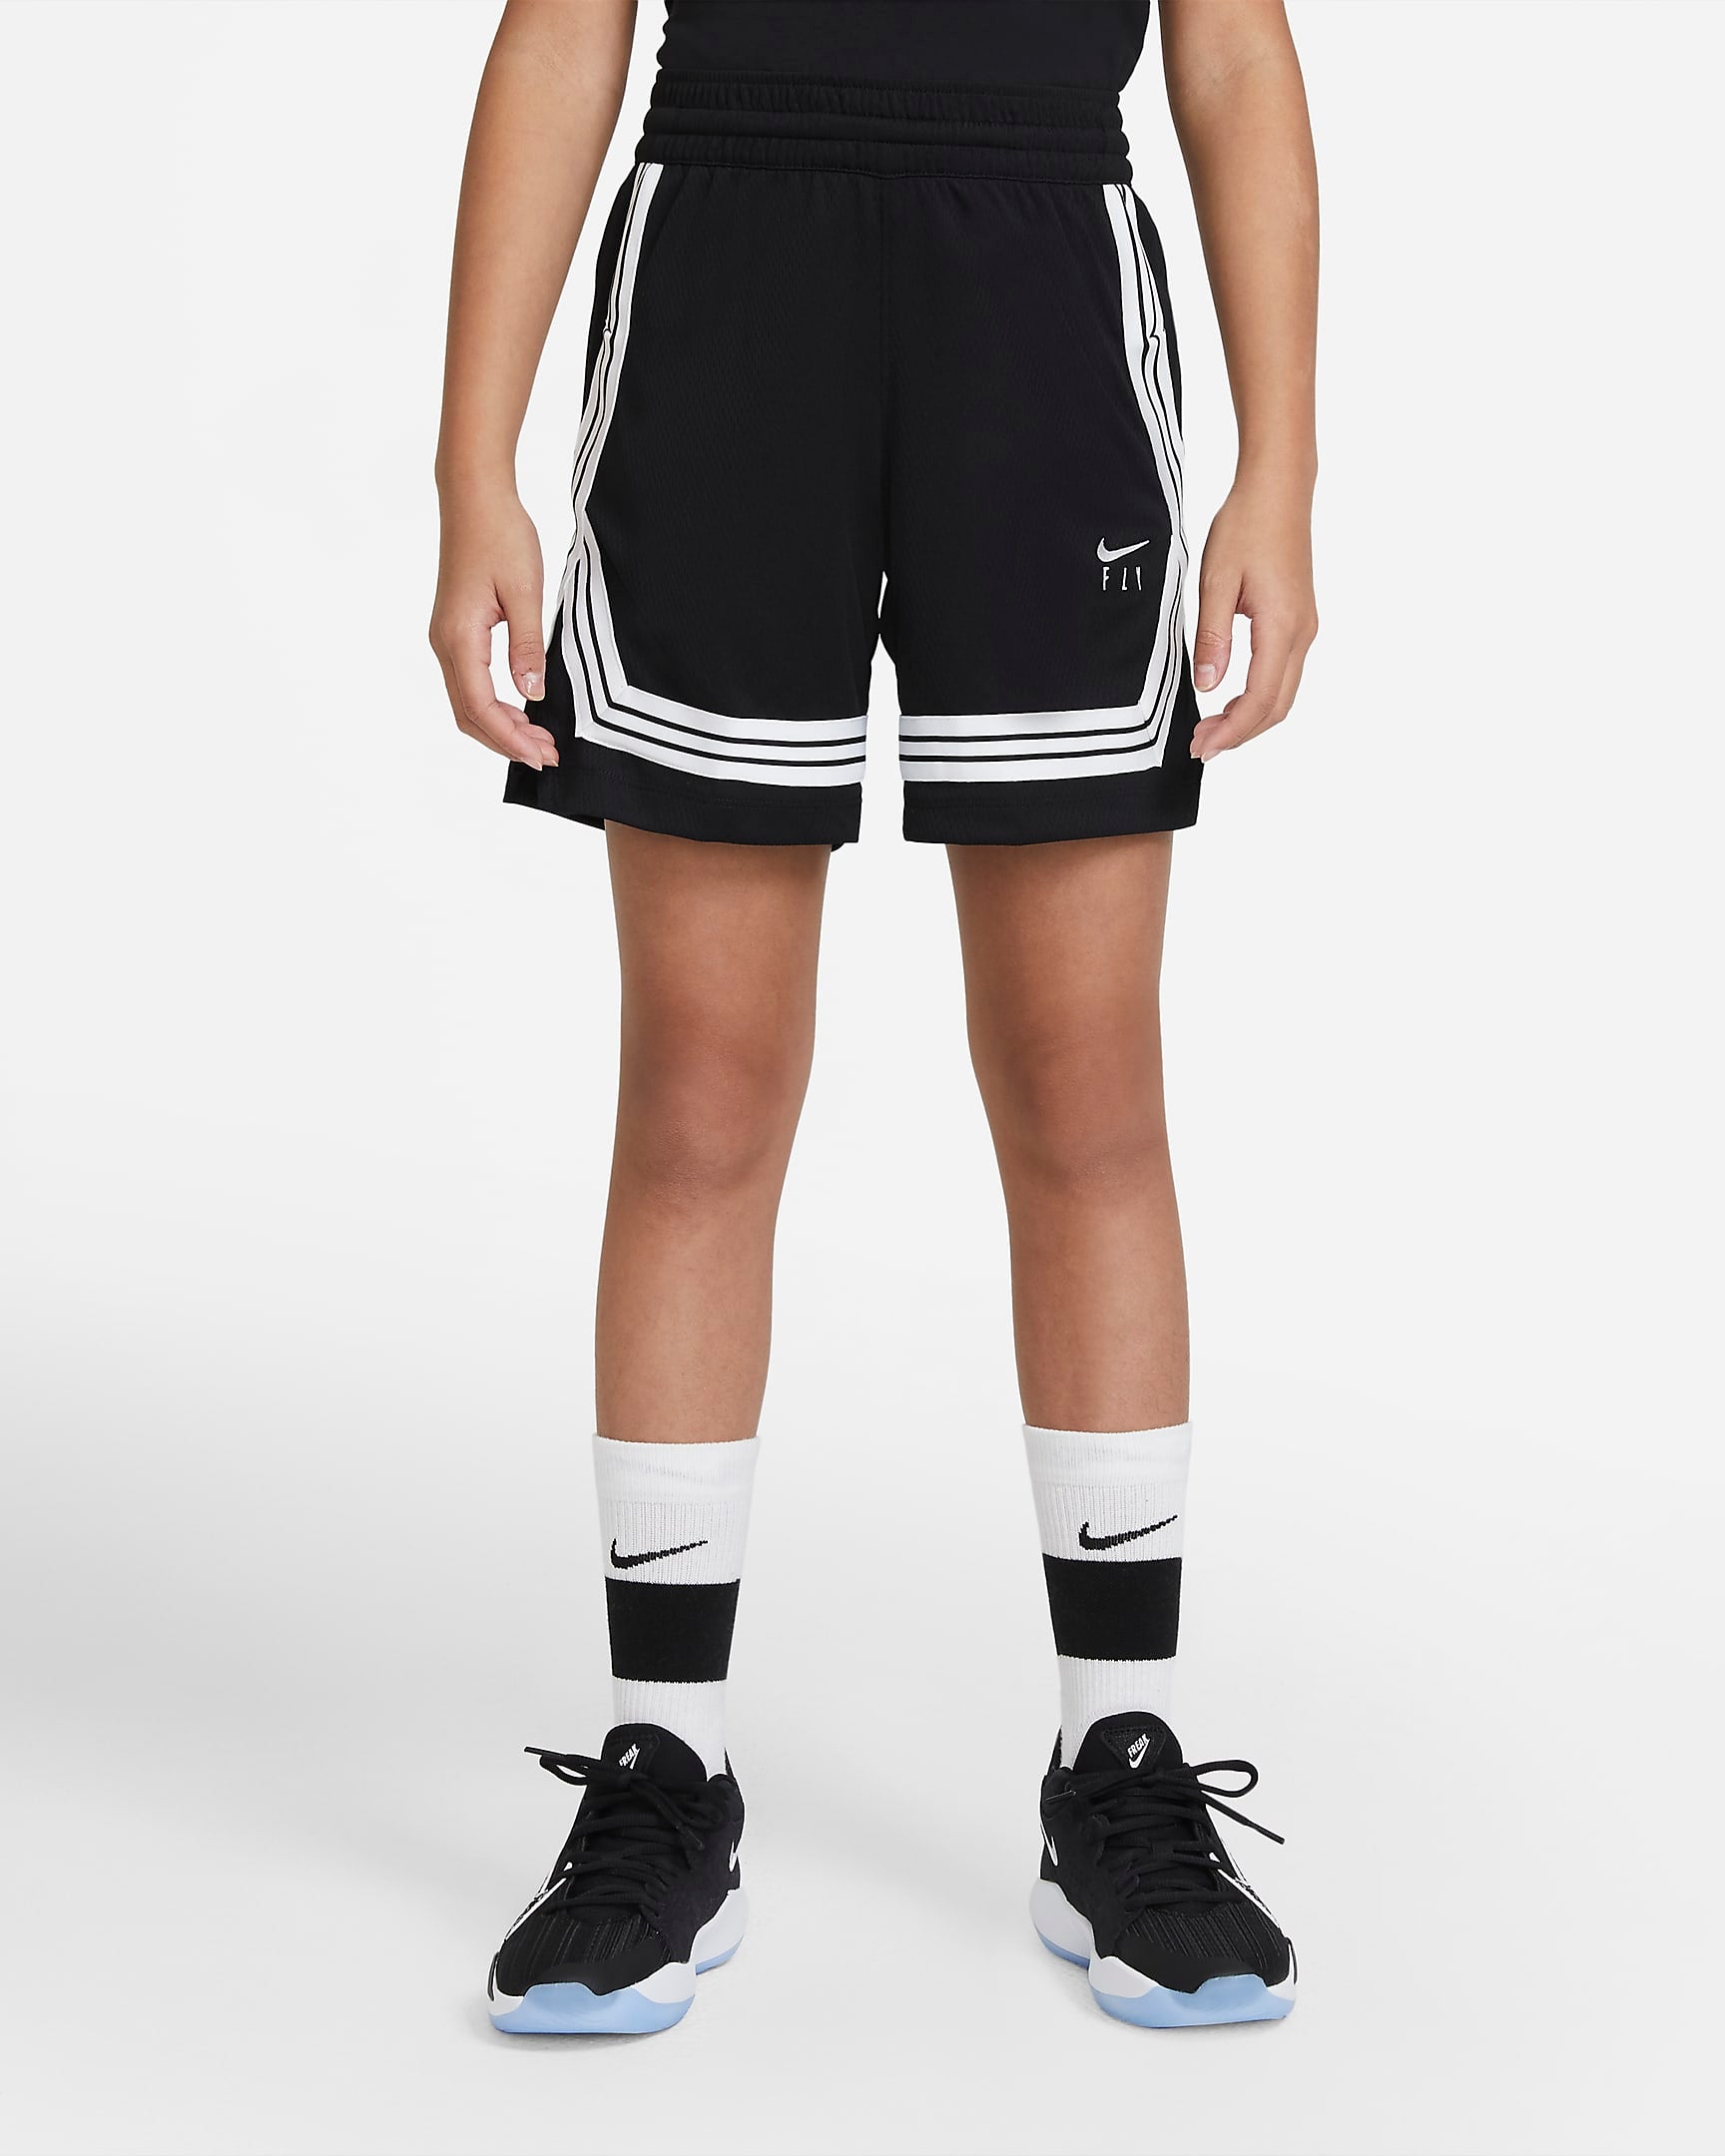 Fly Crossover Basketball Shorts Girls